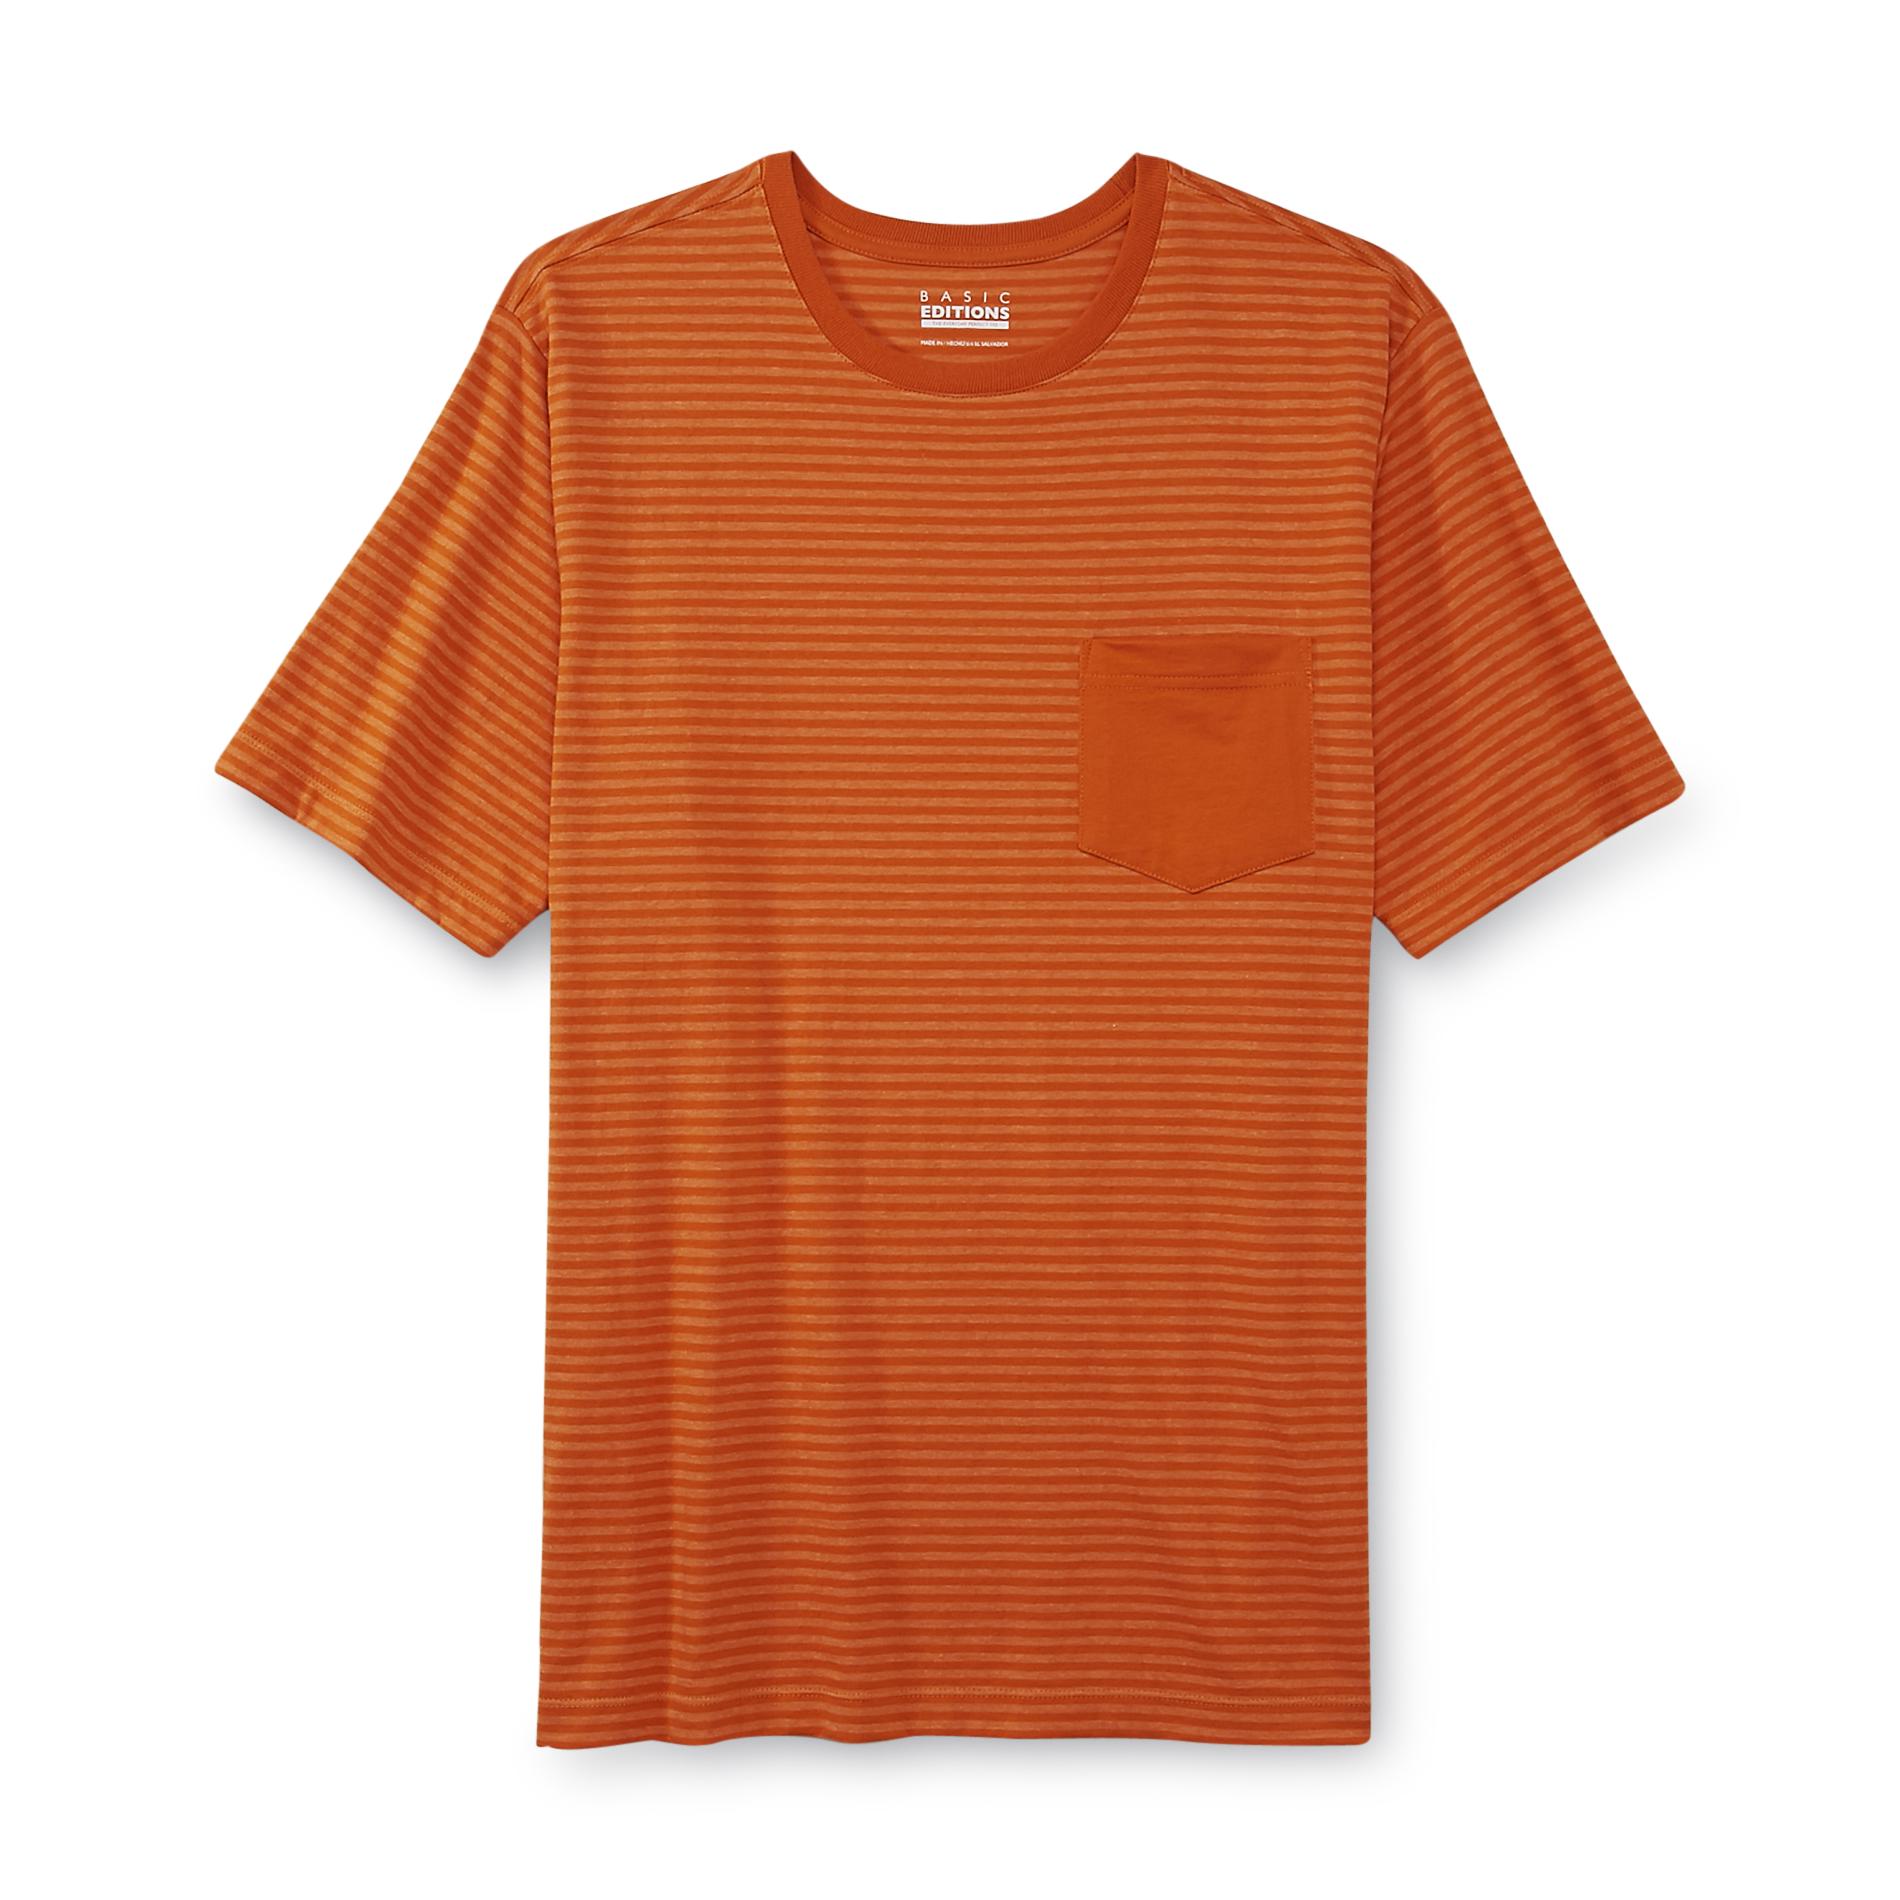 Basic Editions Men's Big & Tall Pocket T-Shirt - Heathered Stripes